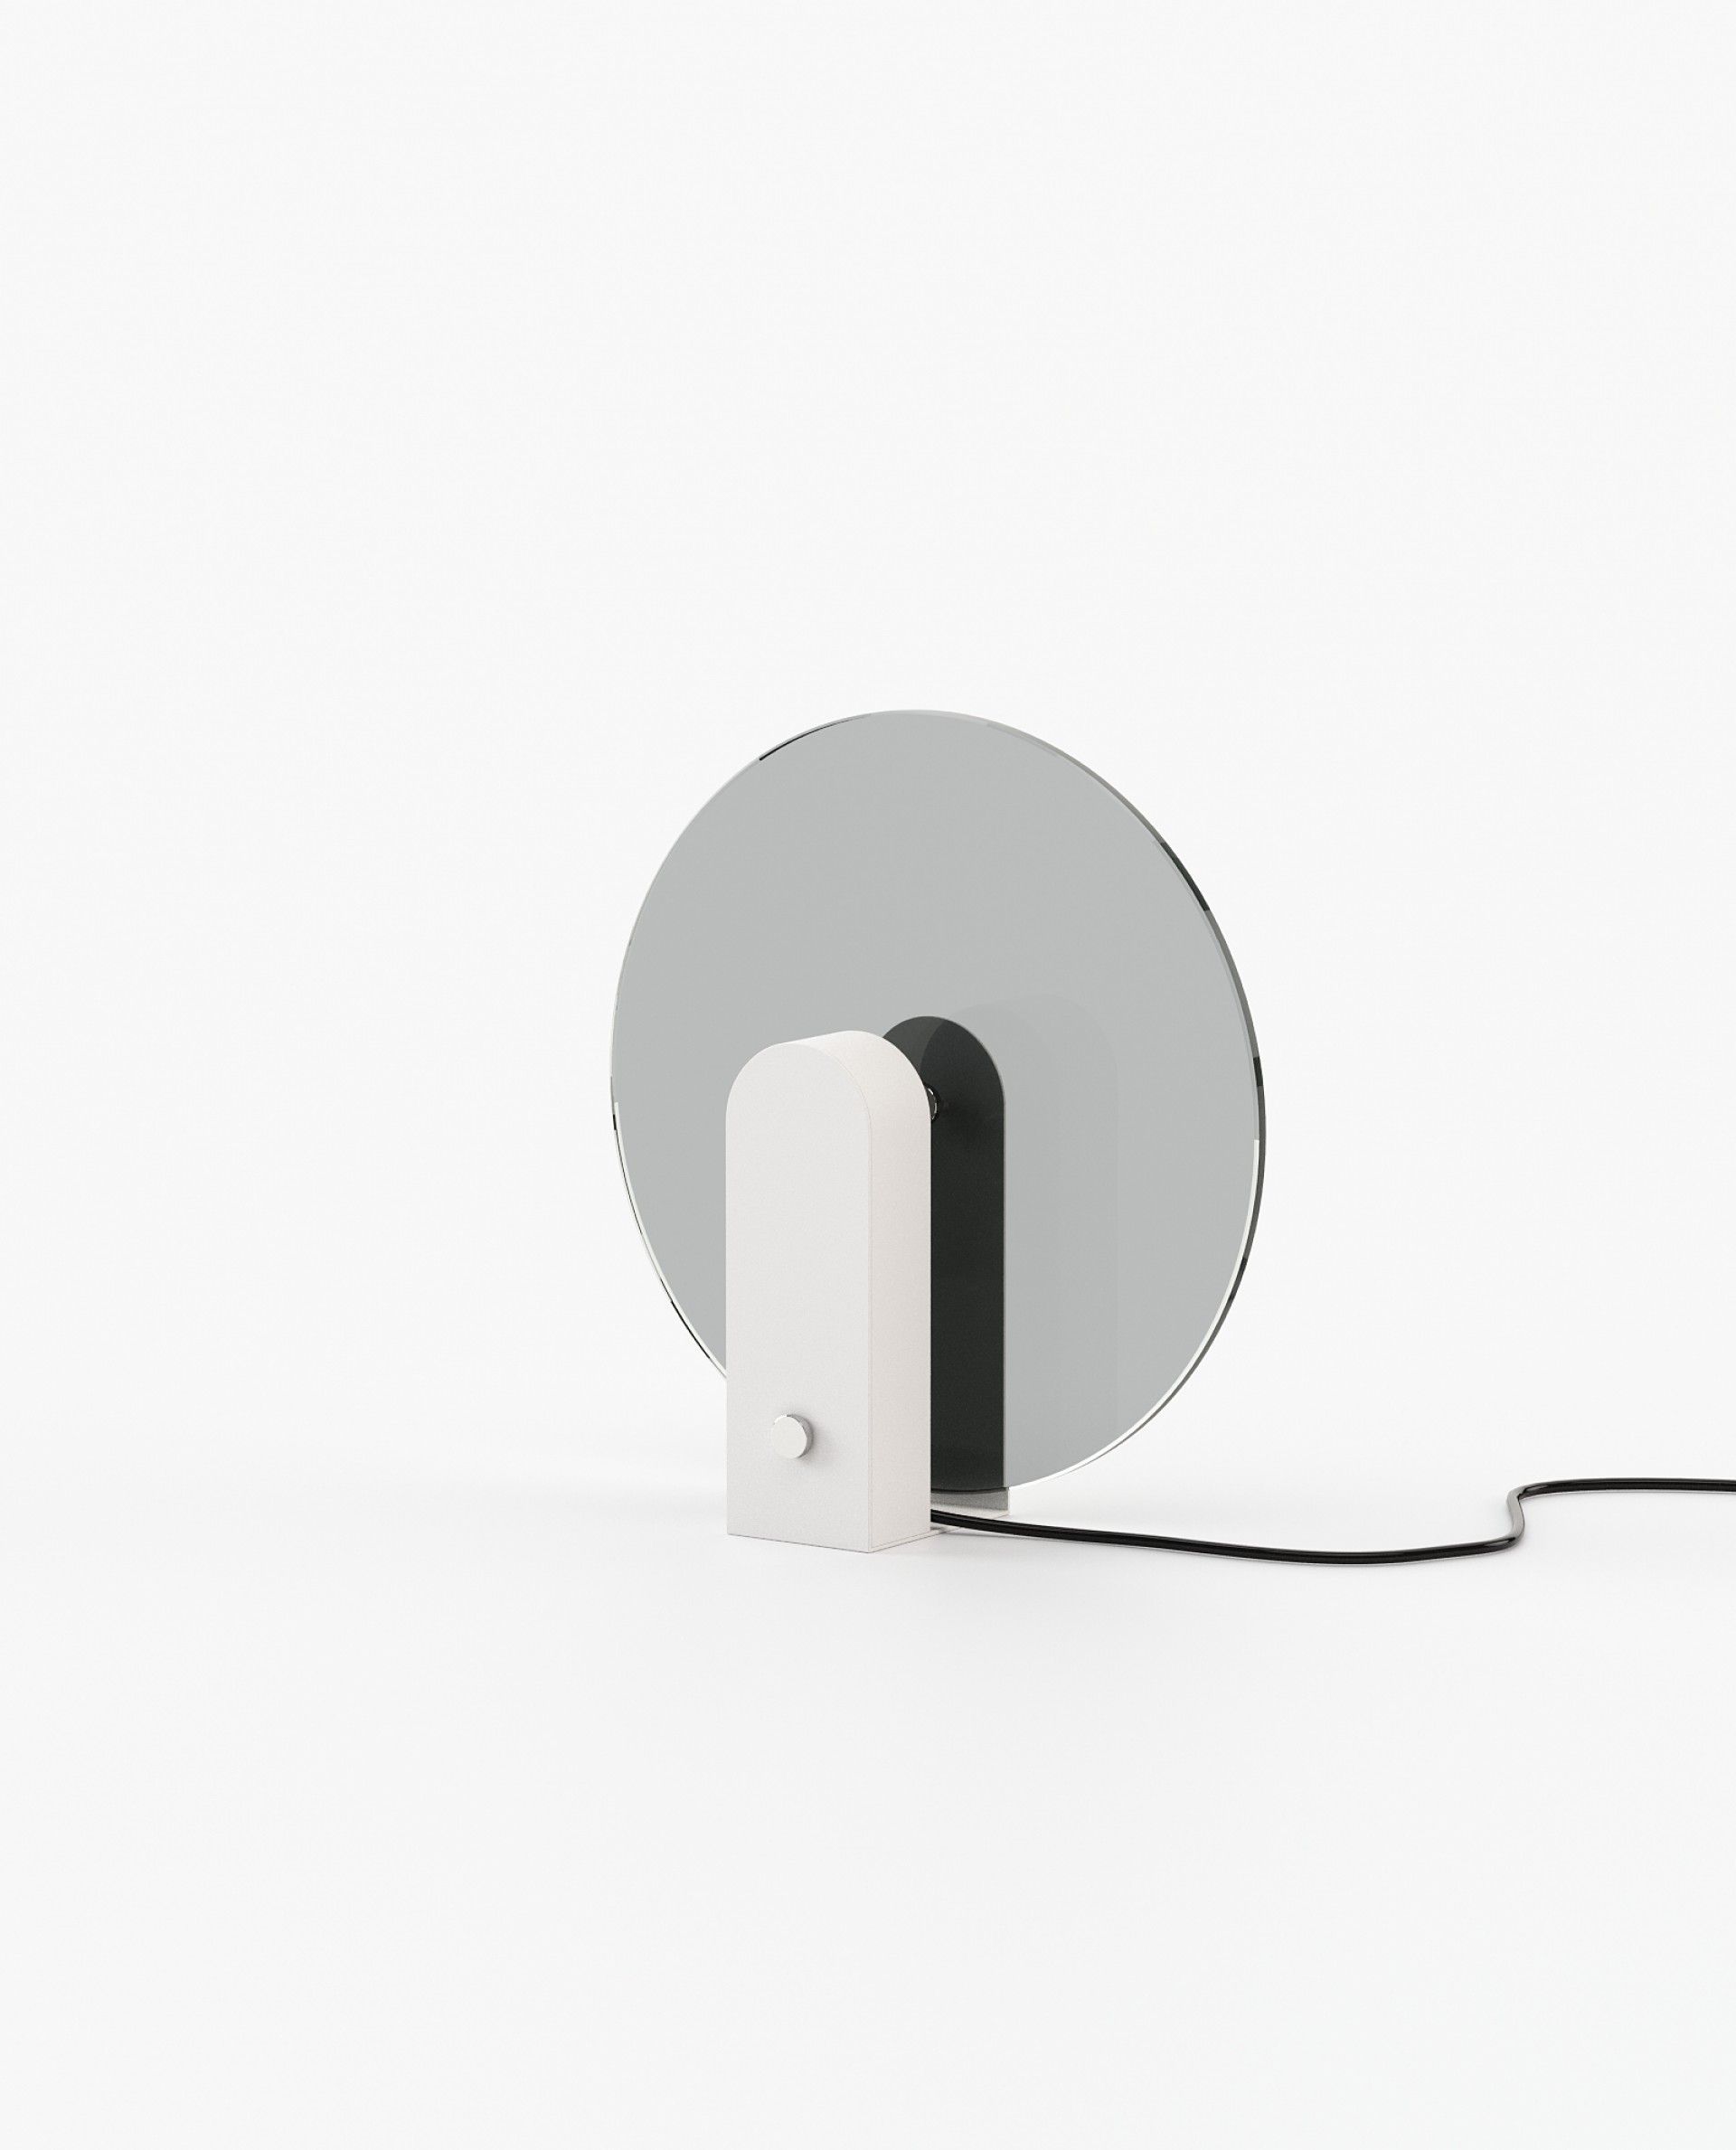 Minimalist Wright Table Lamp by Studio Laskaskas